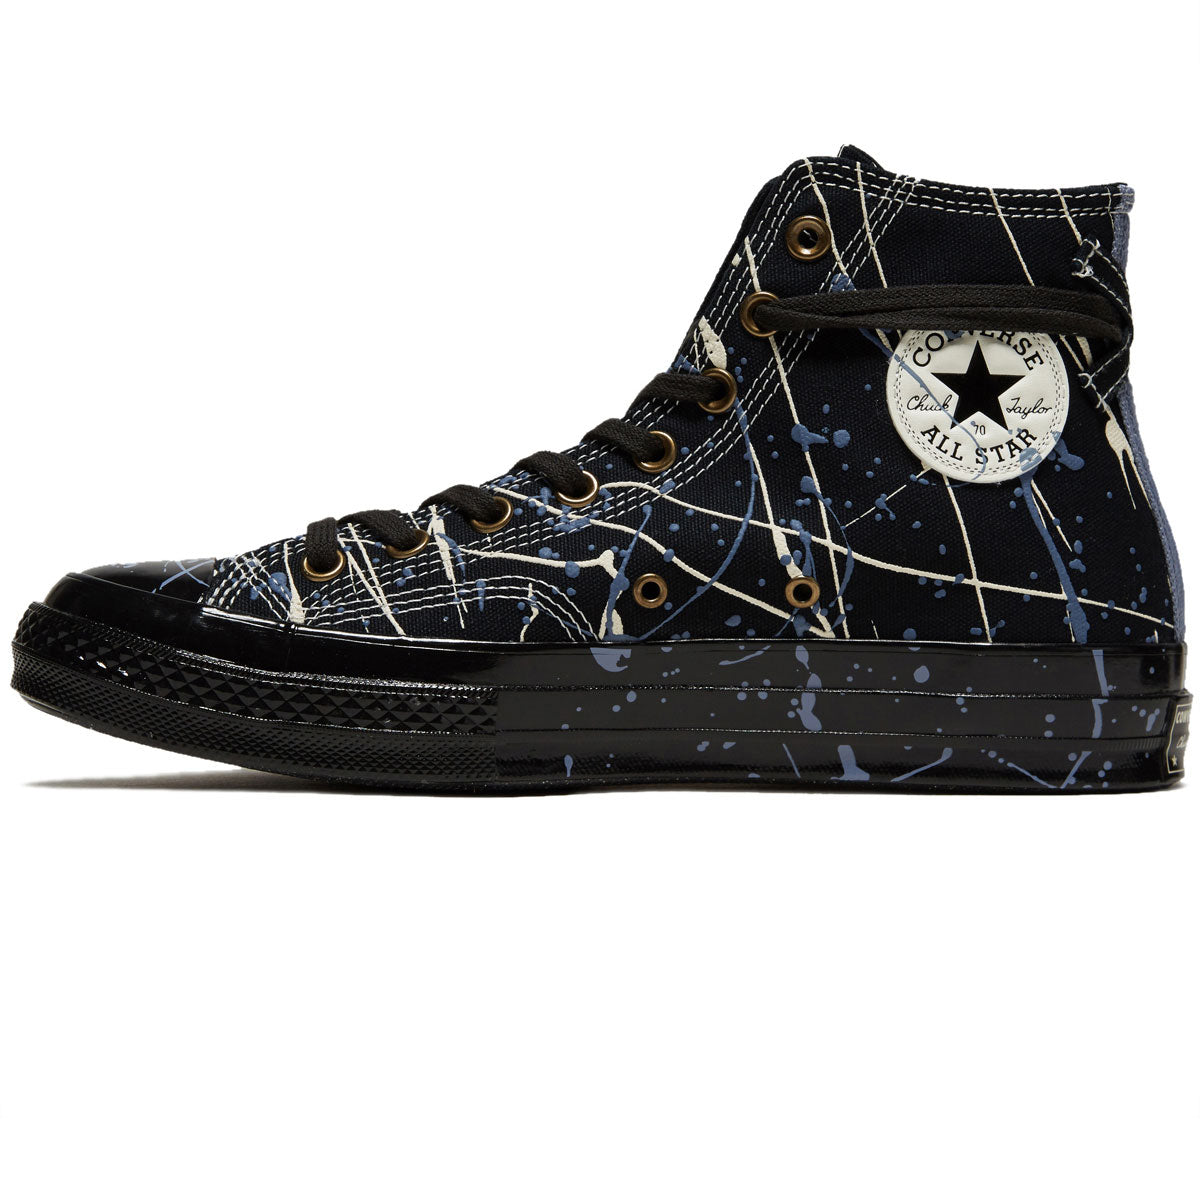 Converse Chuck 70 Hi Paint Splatter Shoes - Black/Egret/Thunder Daze image 2